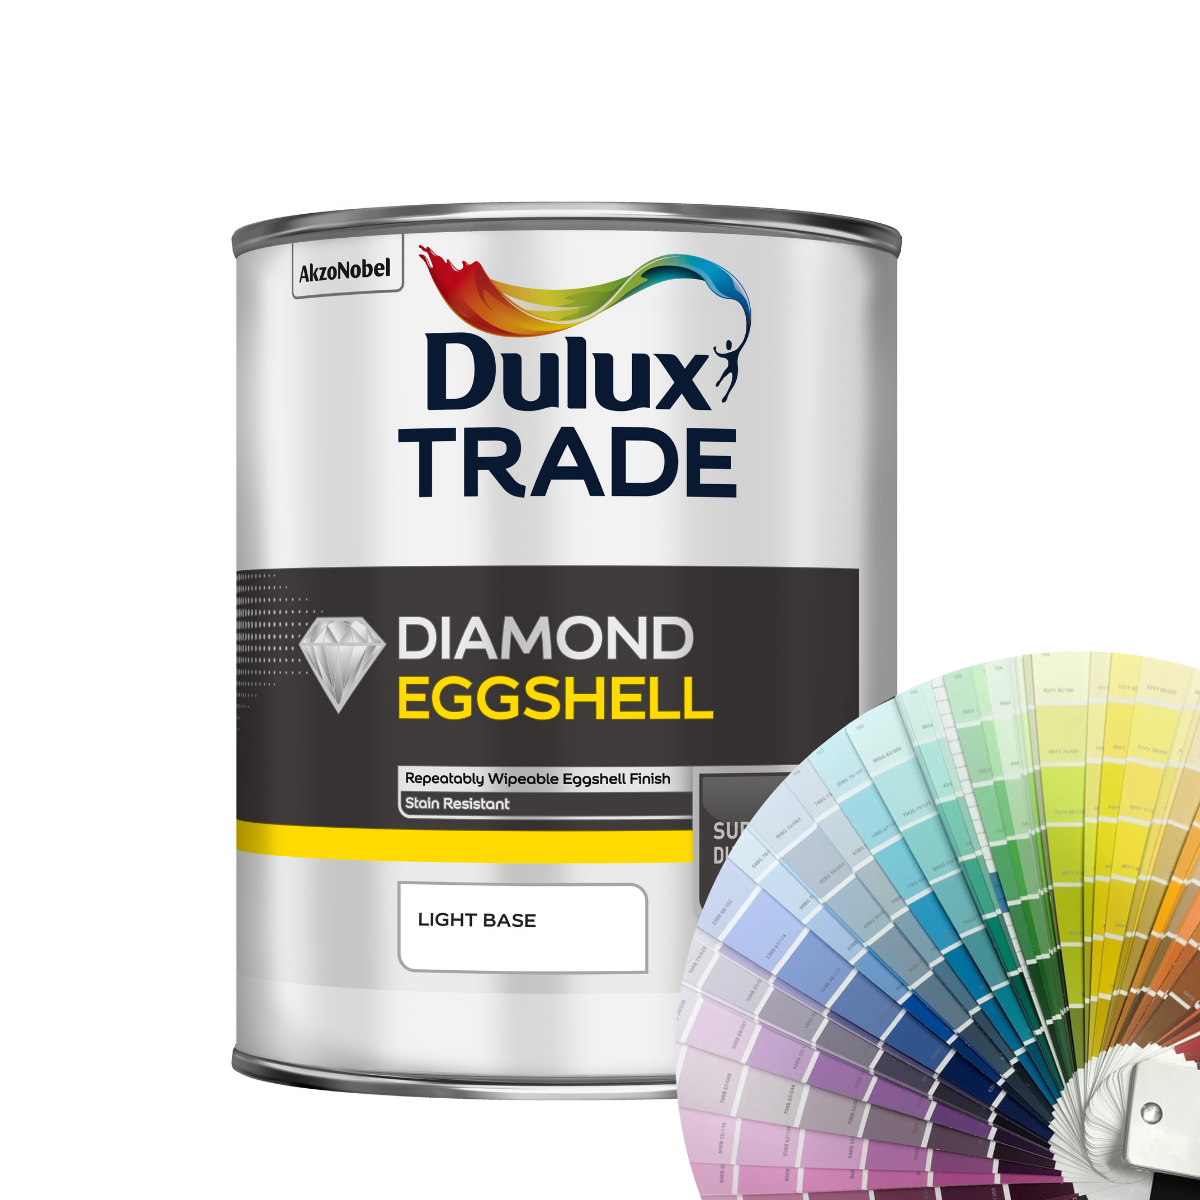 Dulux Trade Diamond Eggshell - Tinted Colour